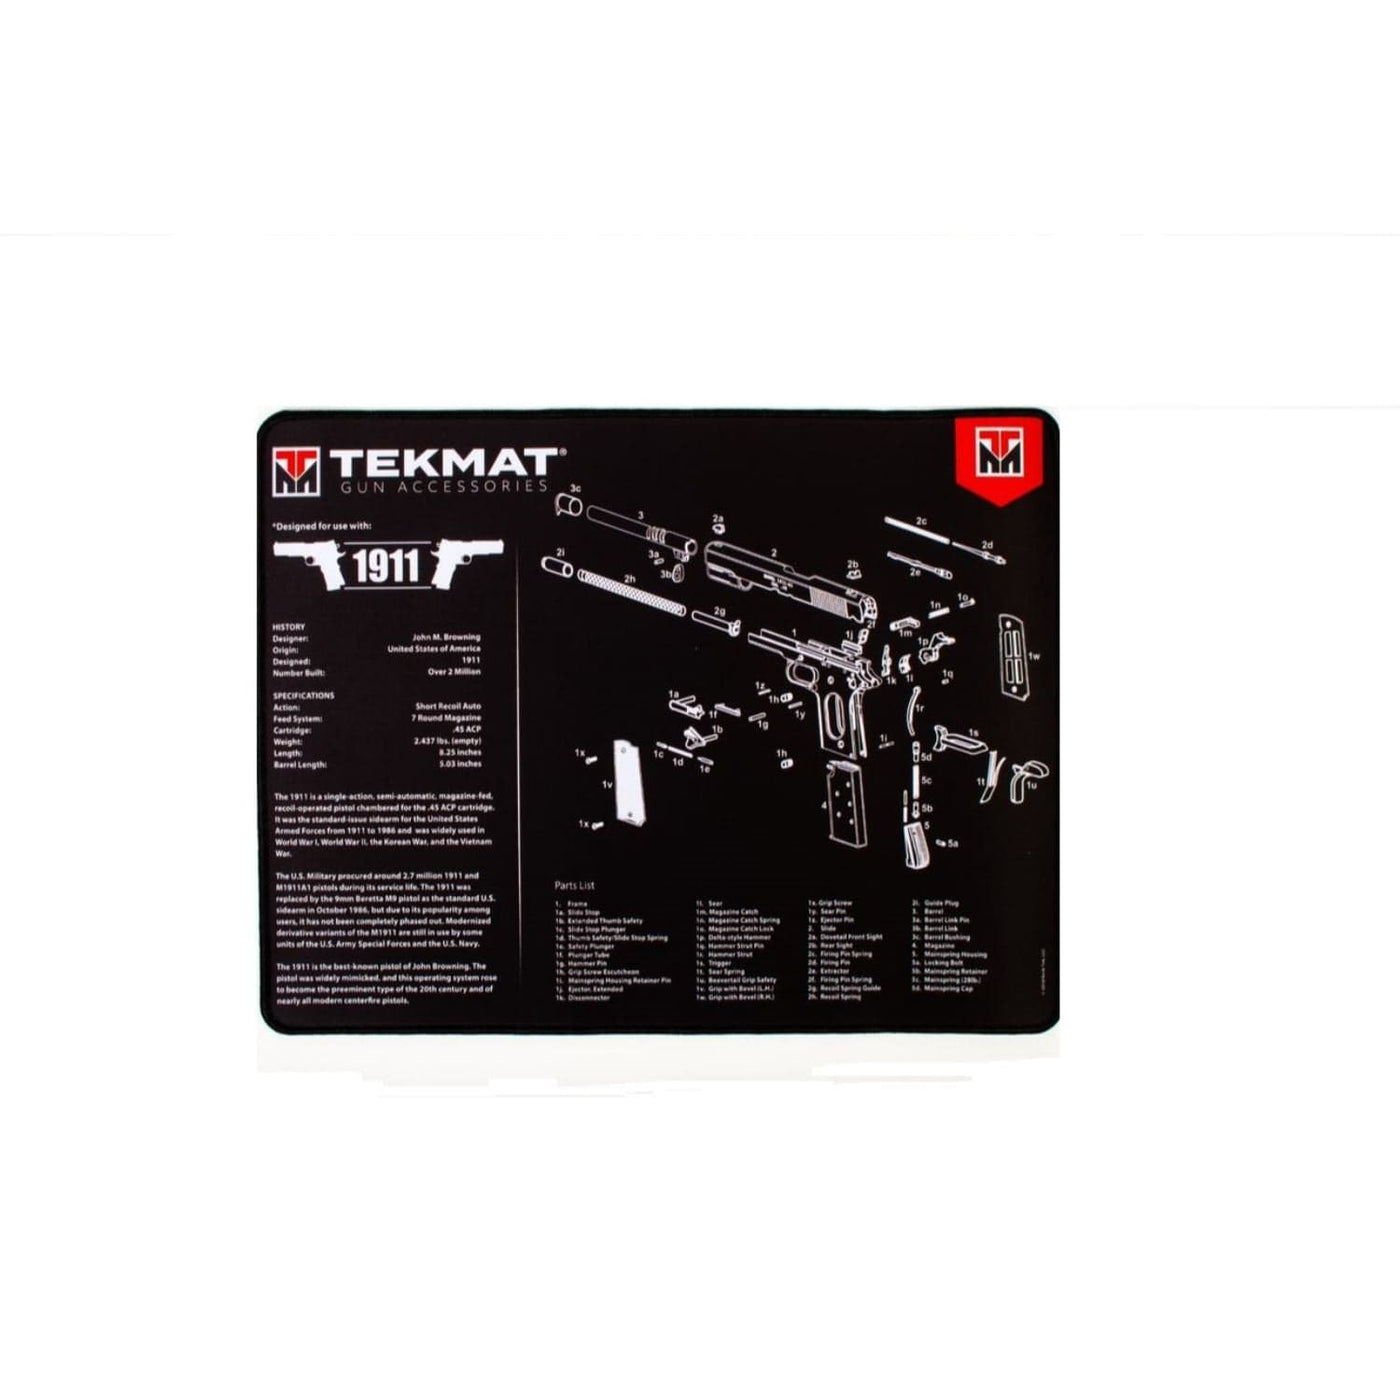 TekMat TekMat Ultra 20 1911 Gun Cleaning Mat Shooting